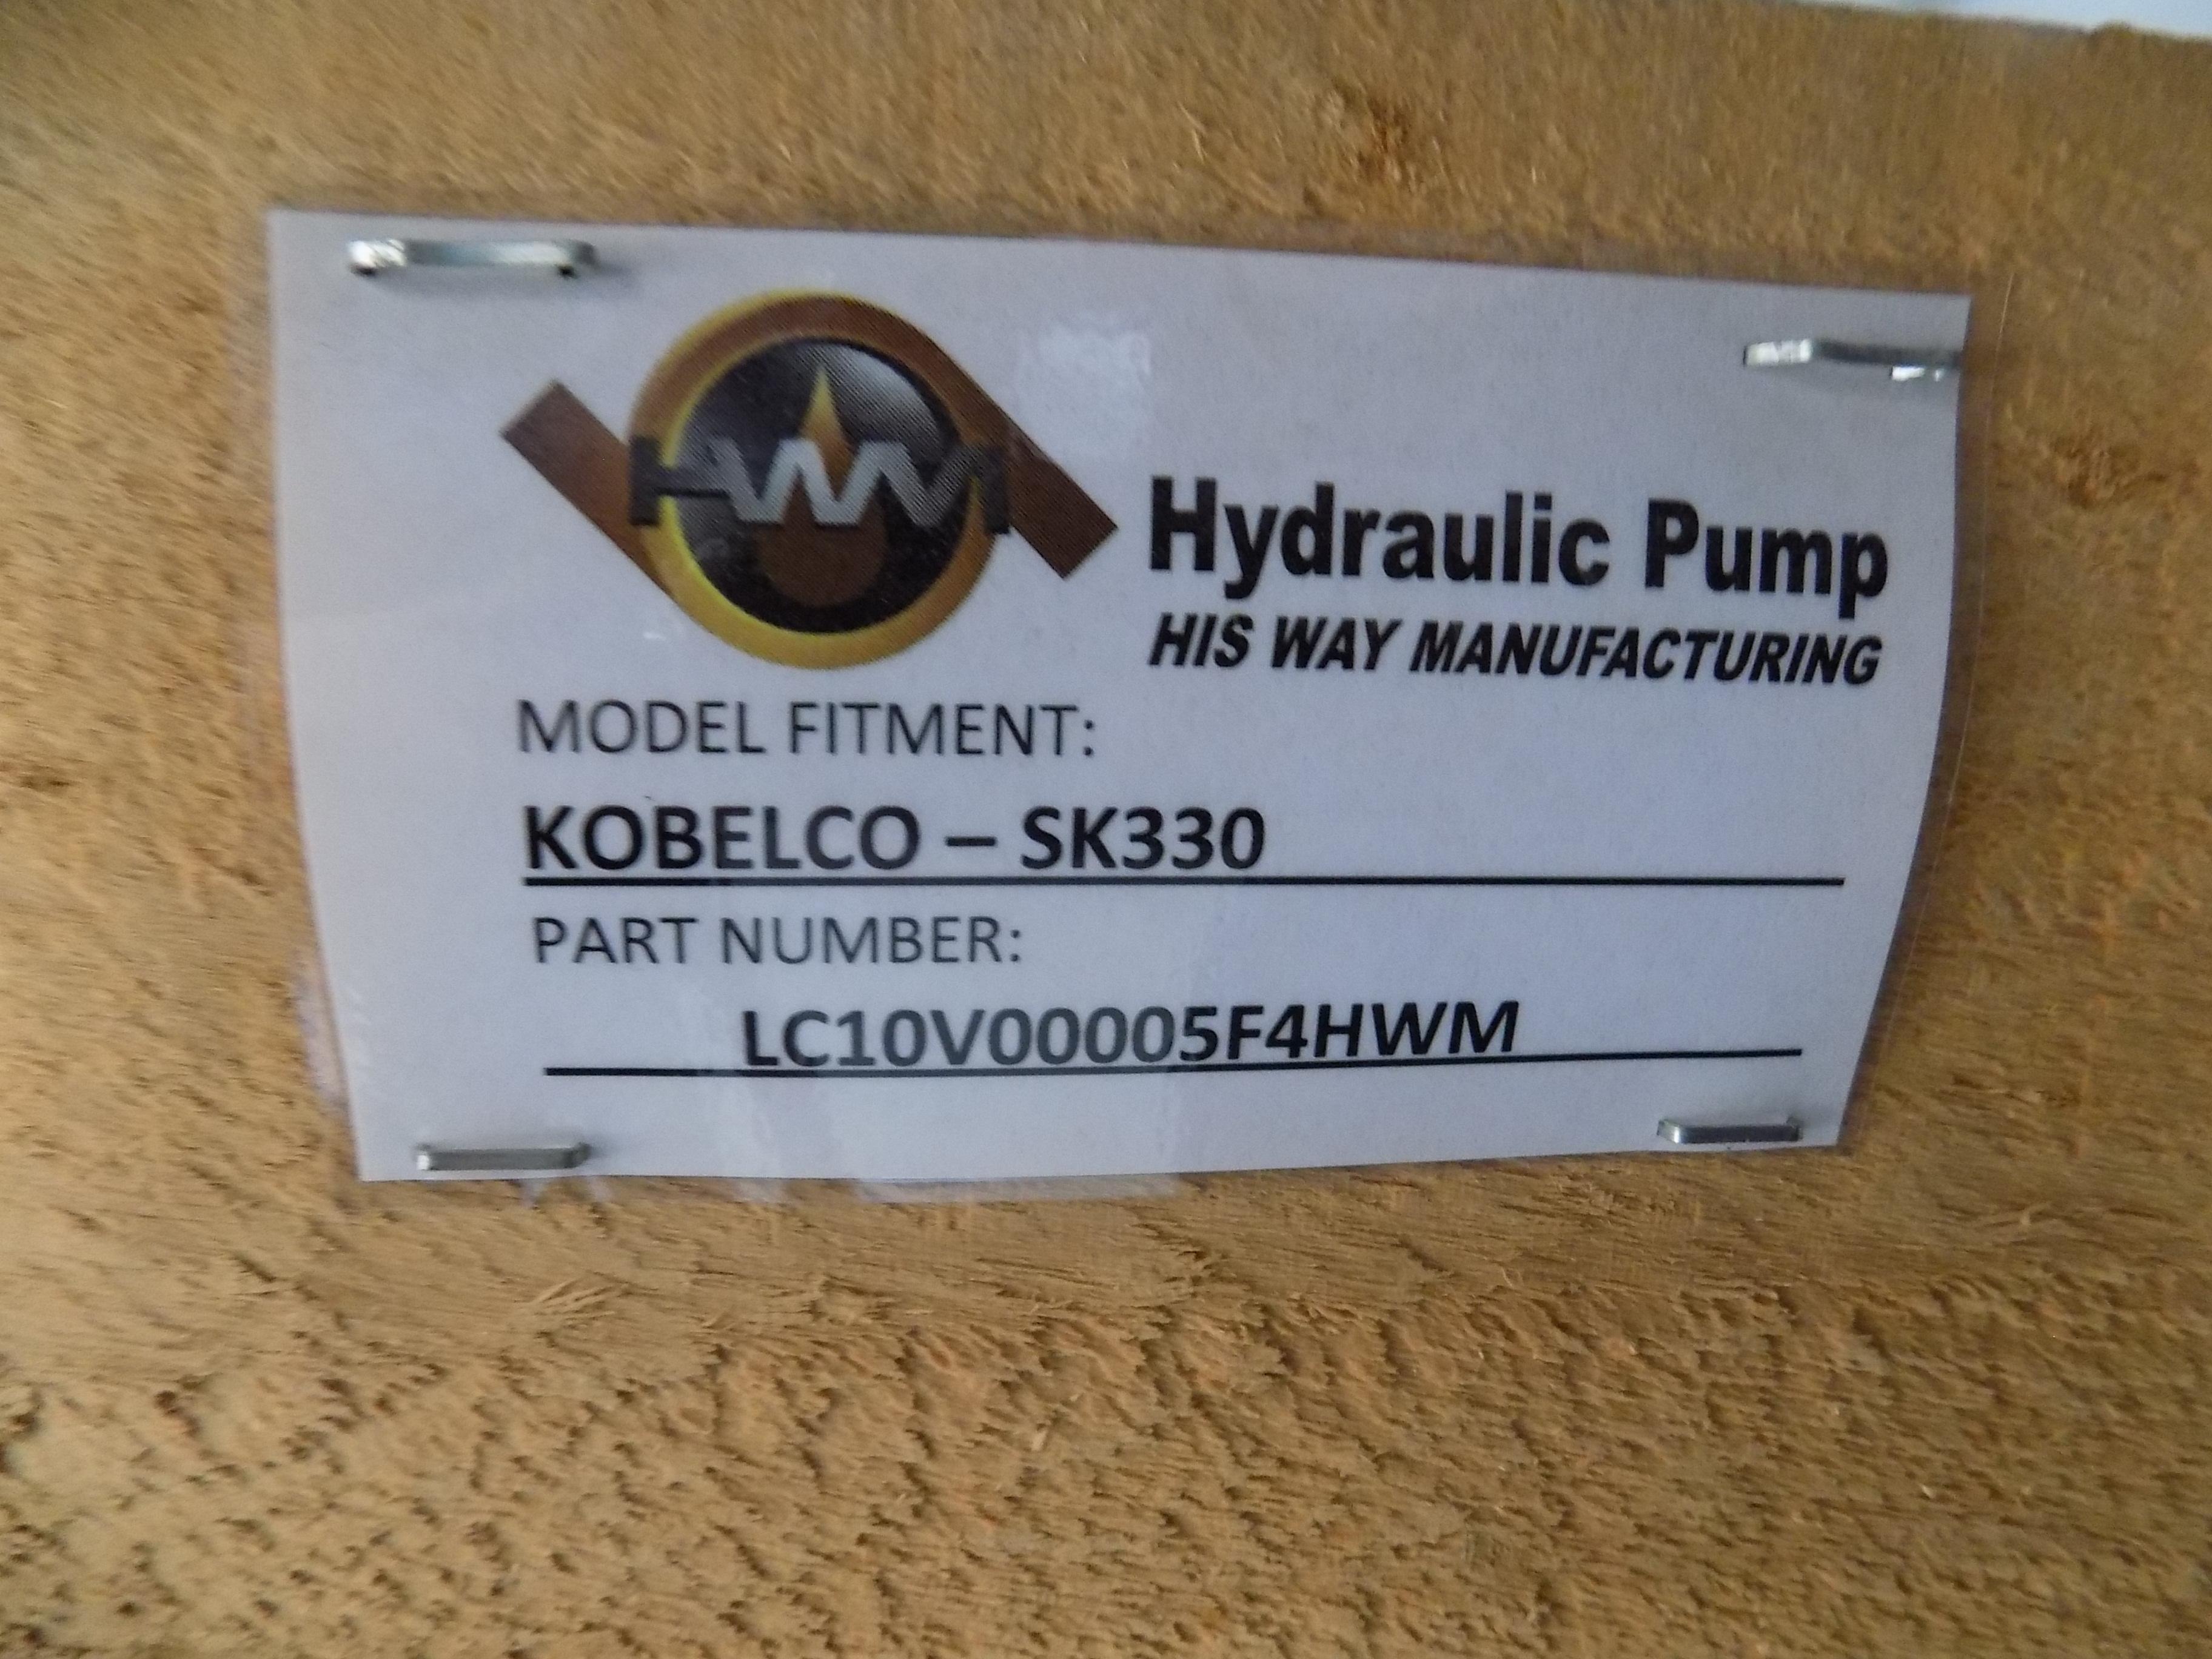 His Way Manufacturing Hydraulic Pump Kobelco-SK330